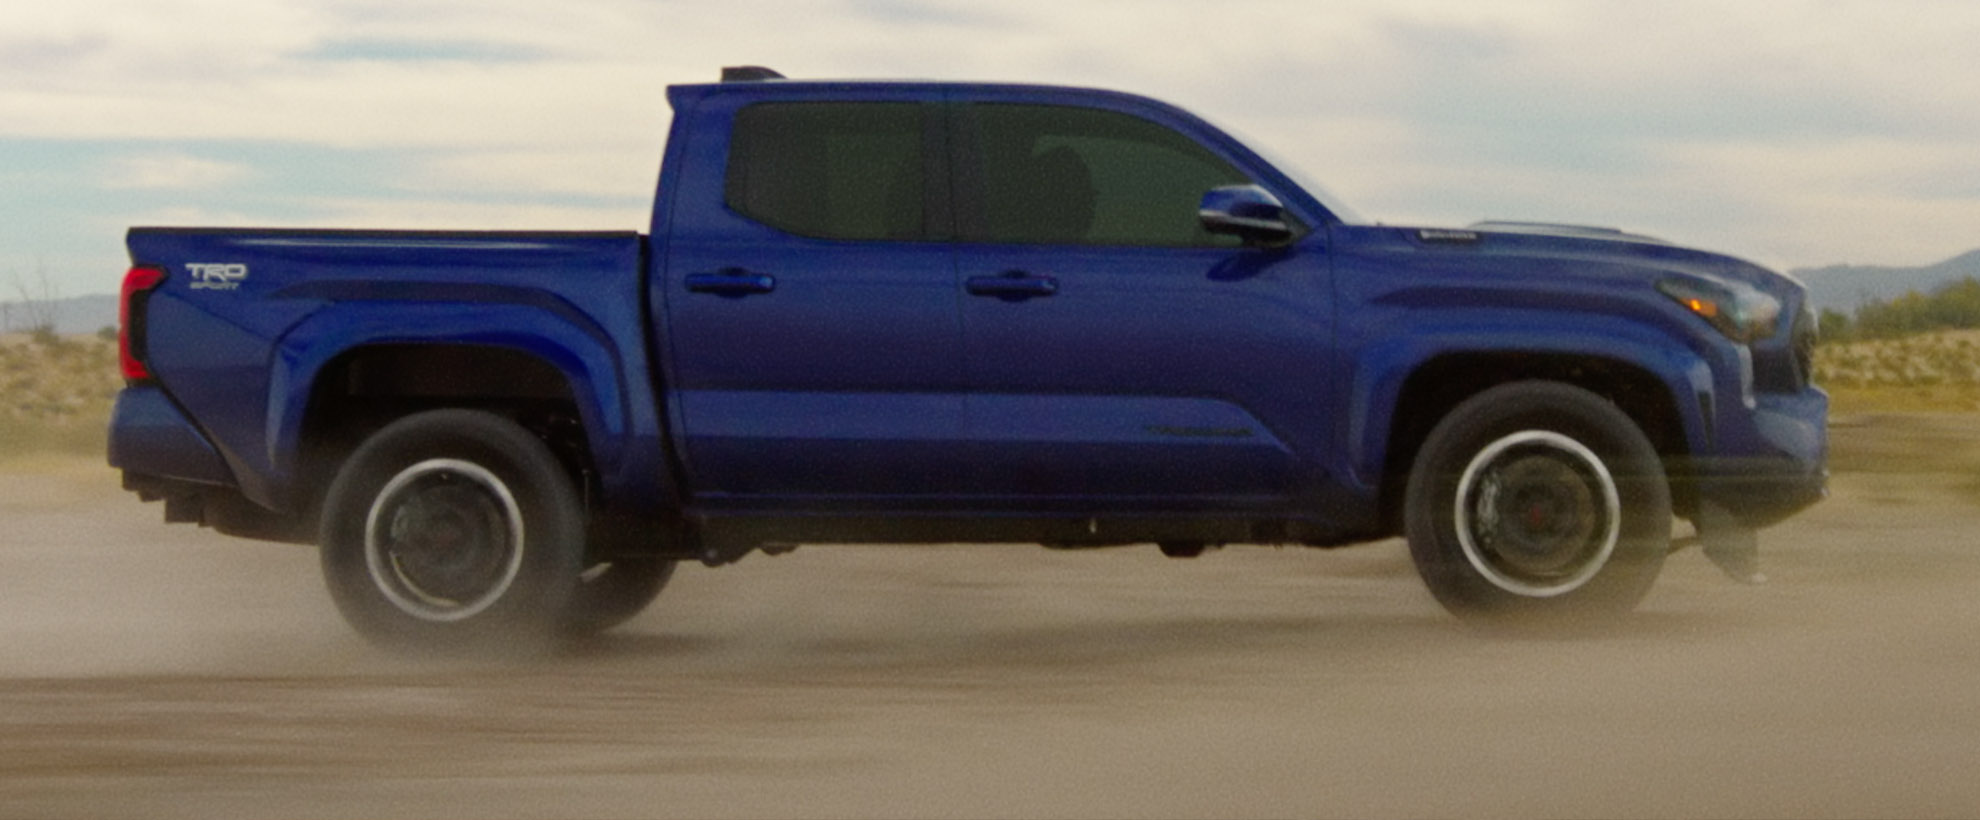 A blue Toyota Tacoma drives through the sand